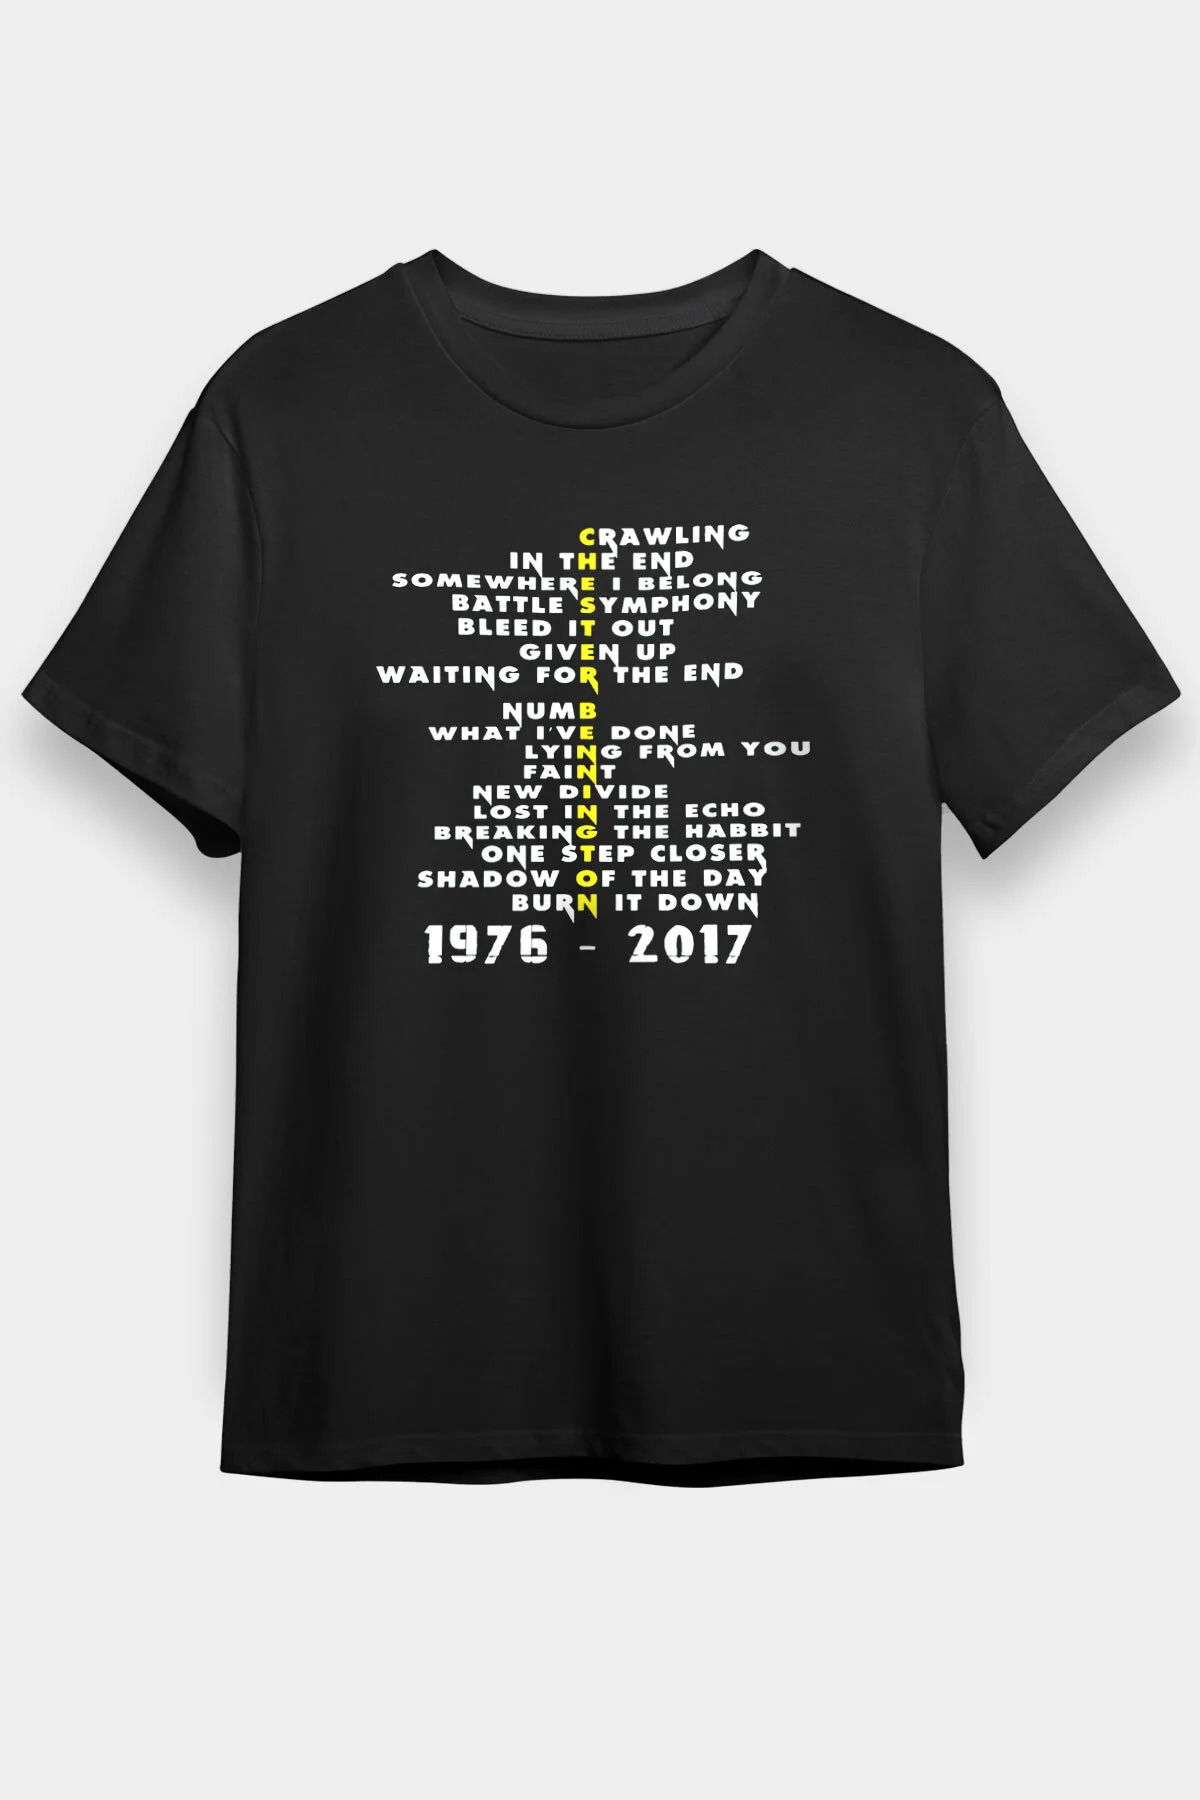 Linkin Park T shirt, Music Band ,Unisex Tshirt 12/